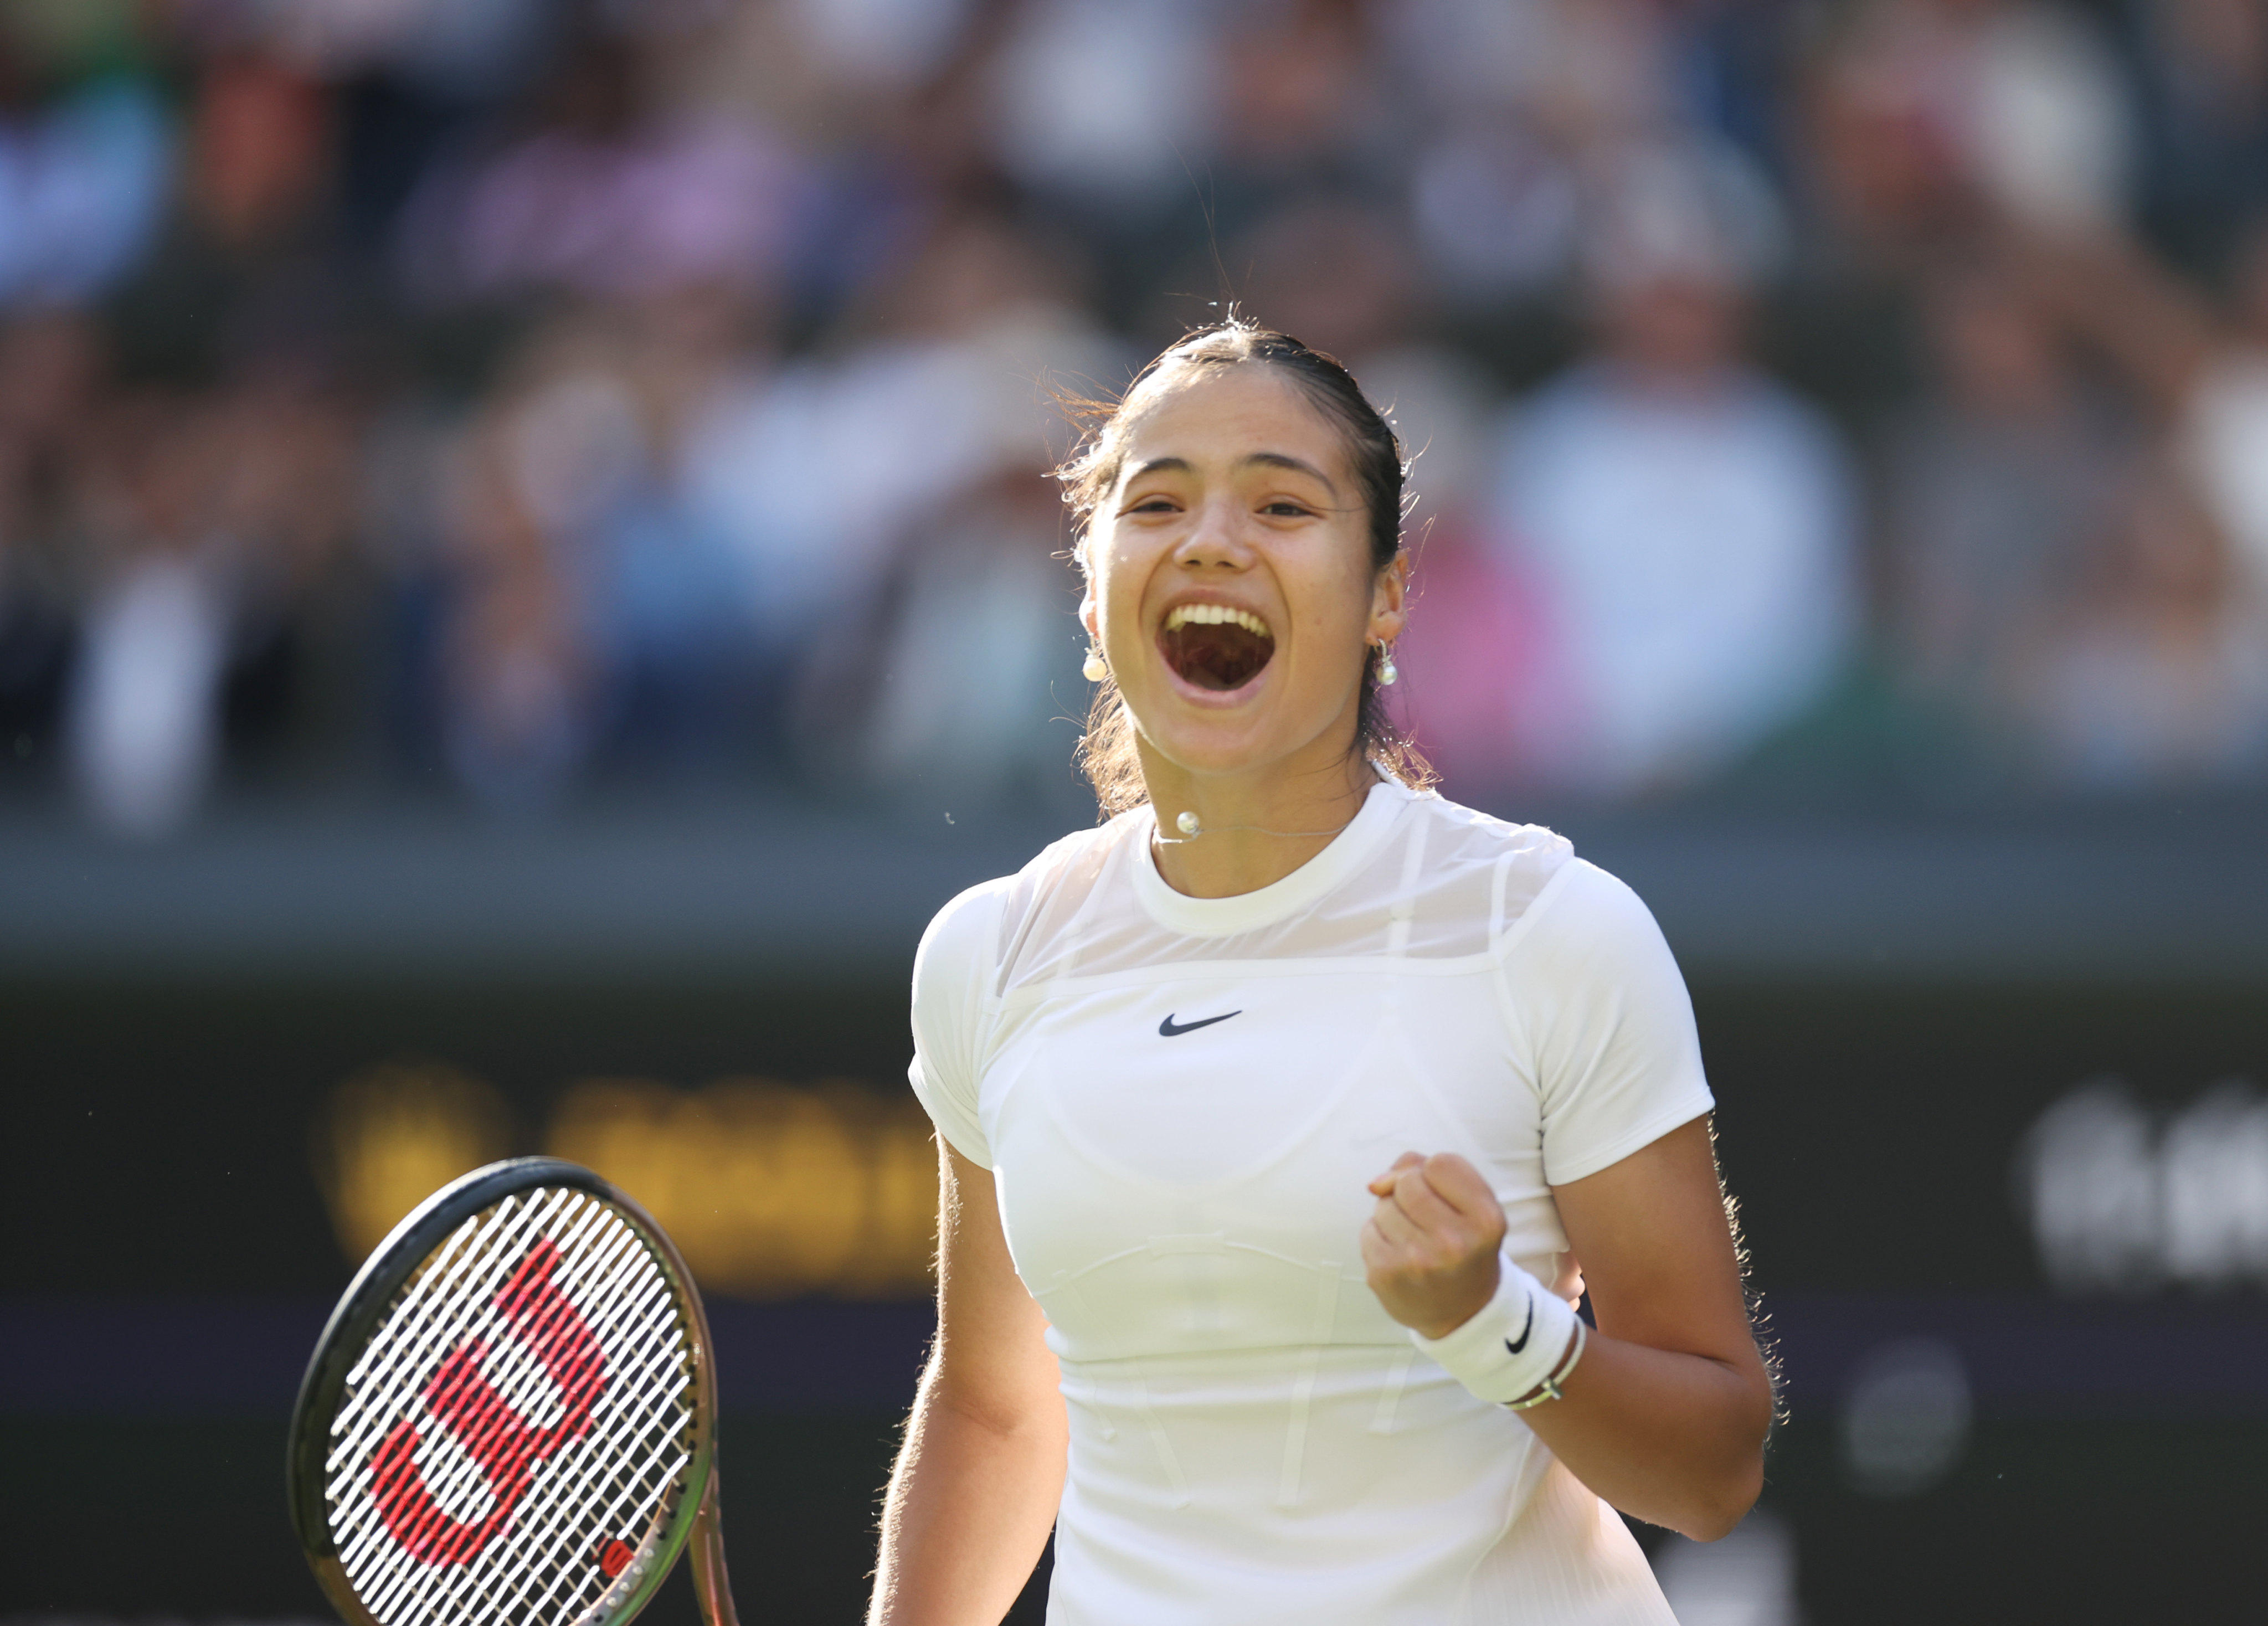 Emma Raducanu celebrates after winning her first-round match against Alison Van Uytvanck at Wimbledon. Photo: Xinhua/